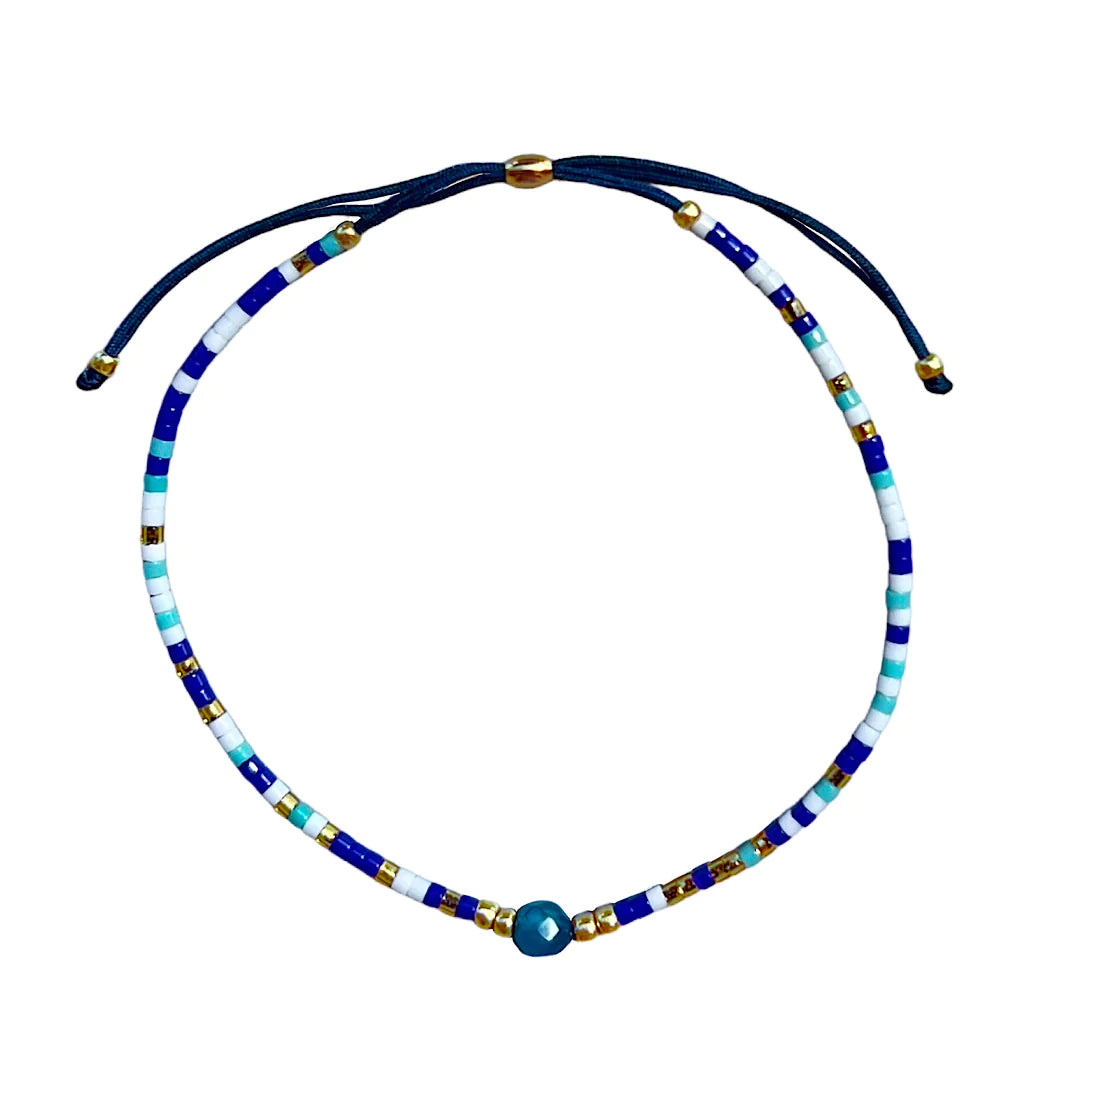 One bead strand of a blue 3-strand bracelet set.